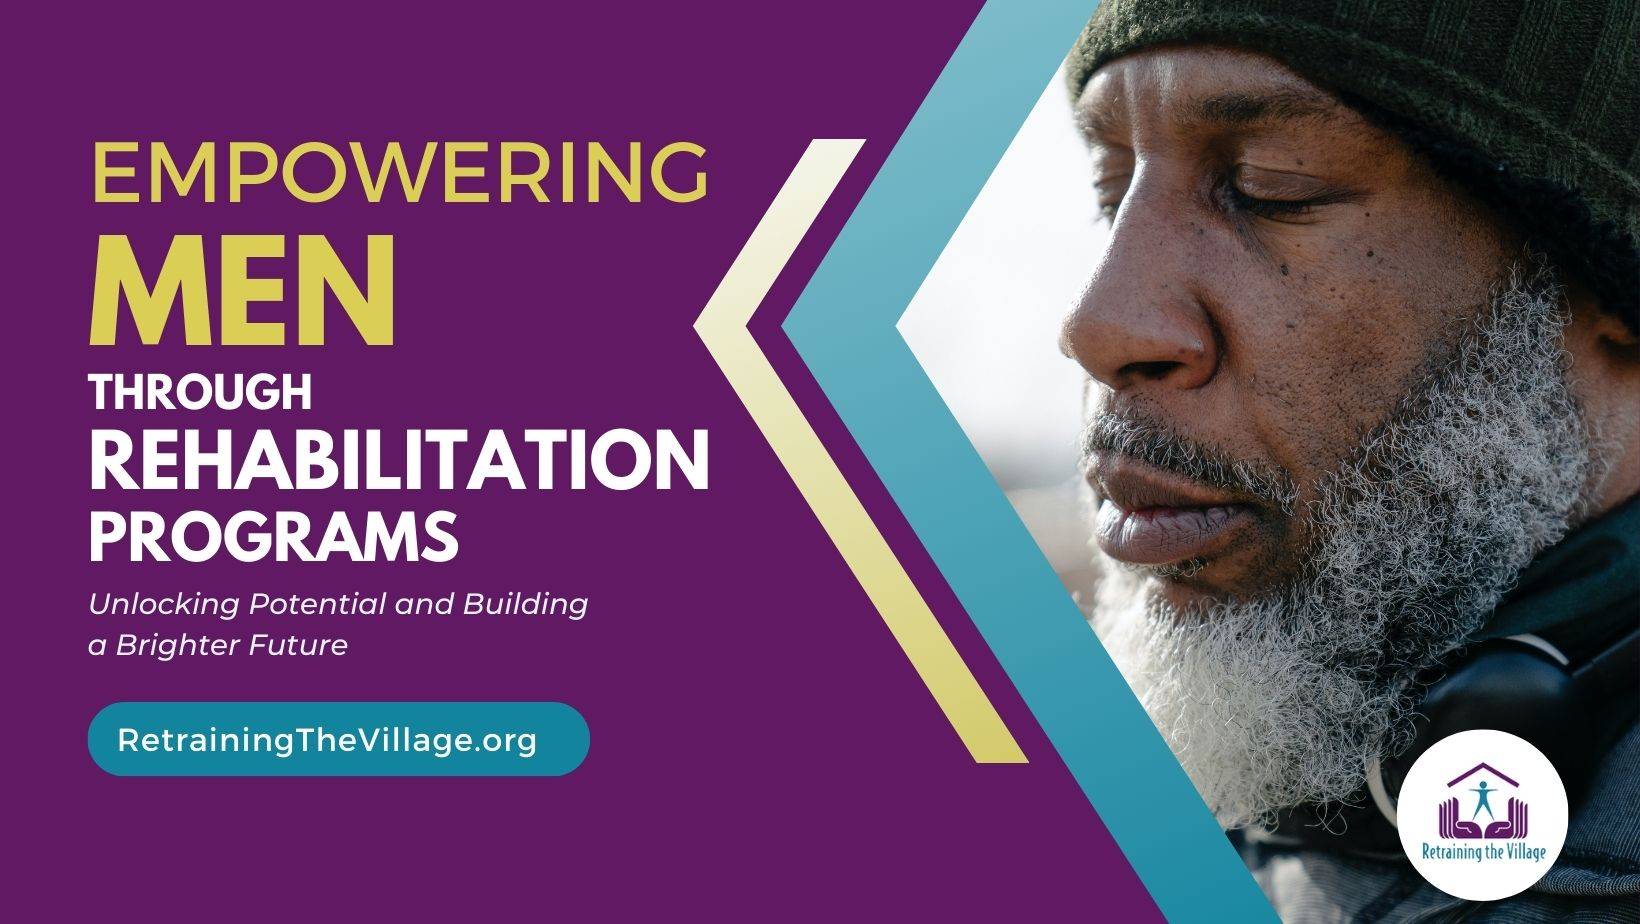 Empowering men through rehabilitation programs - an article from Retraining the Village nonprofit organization